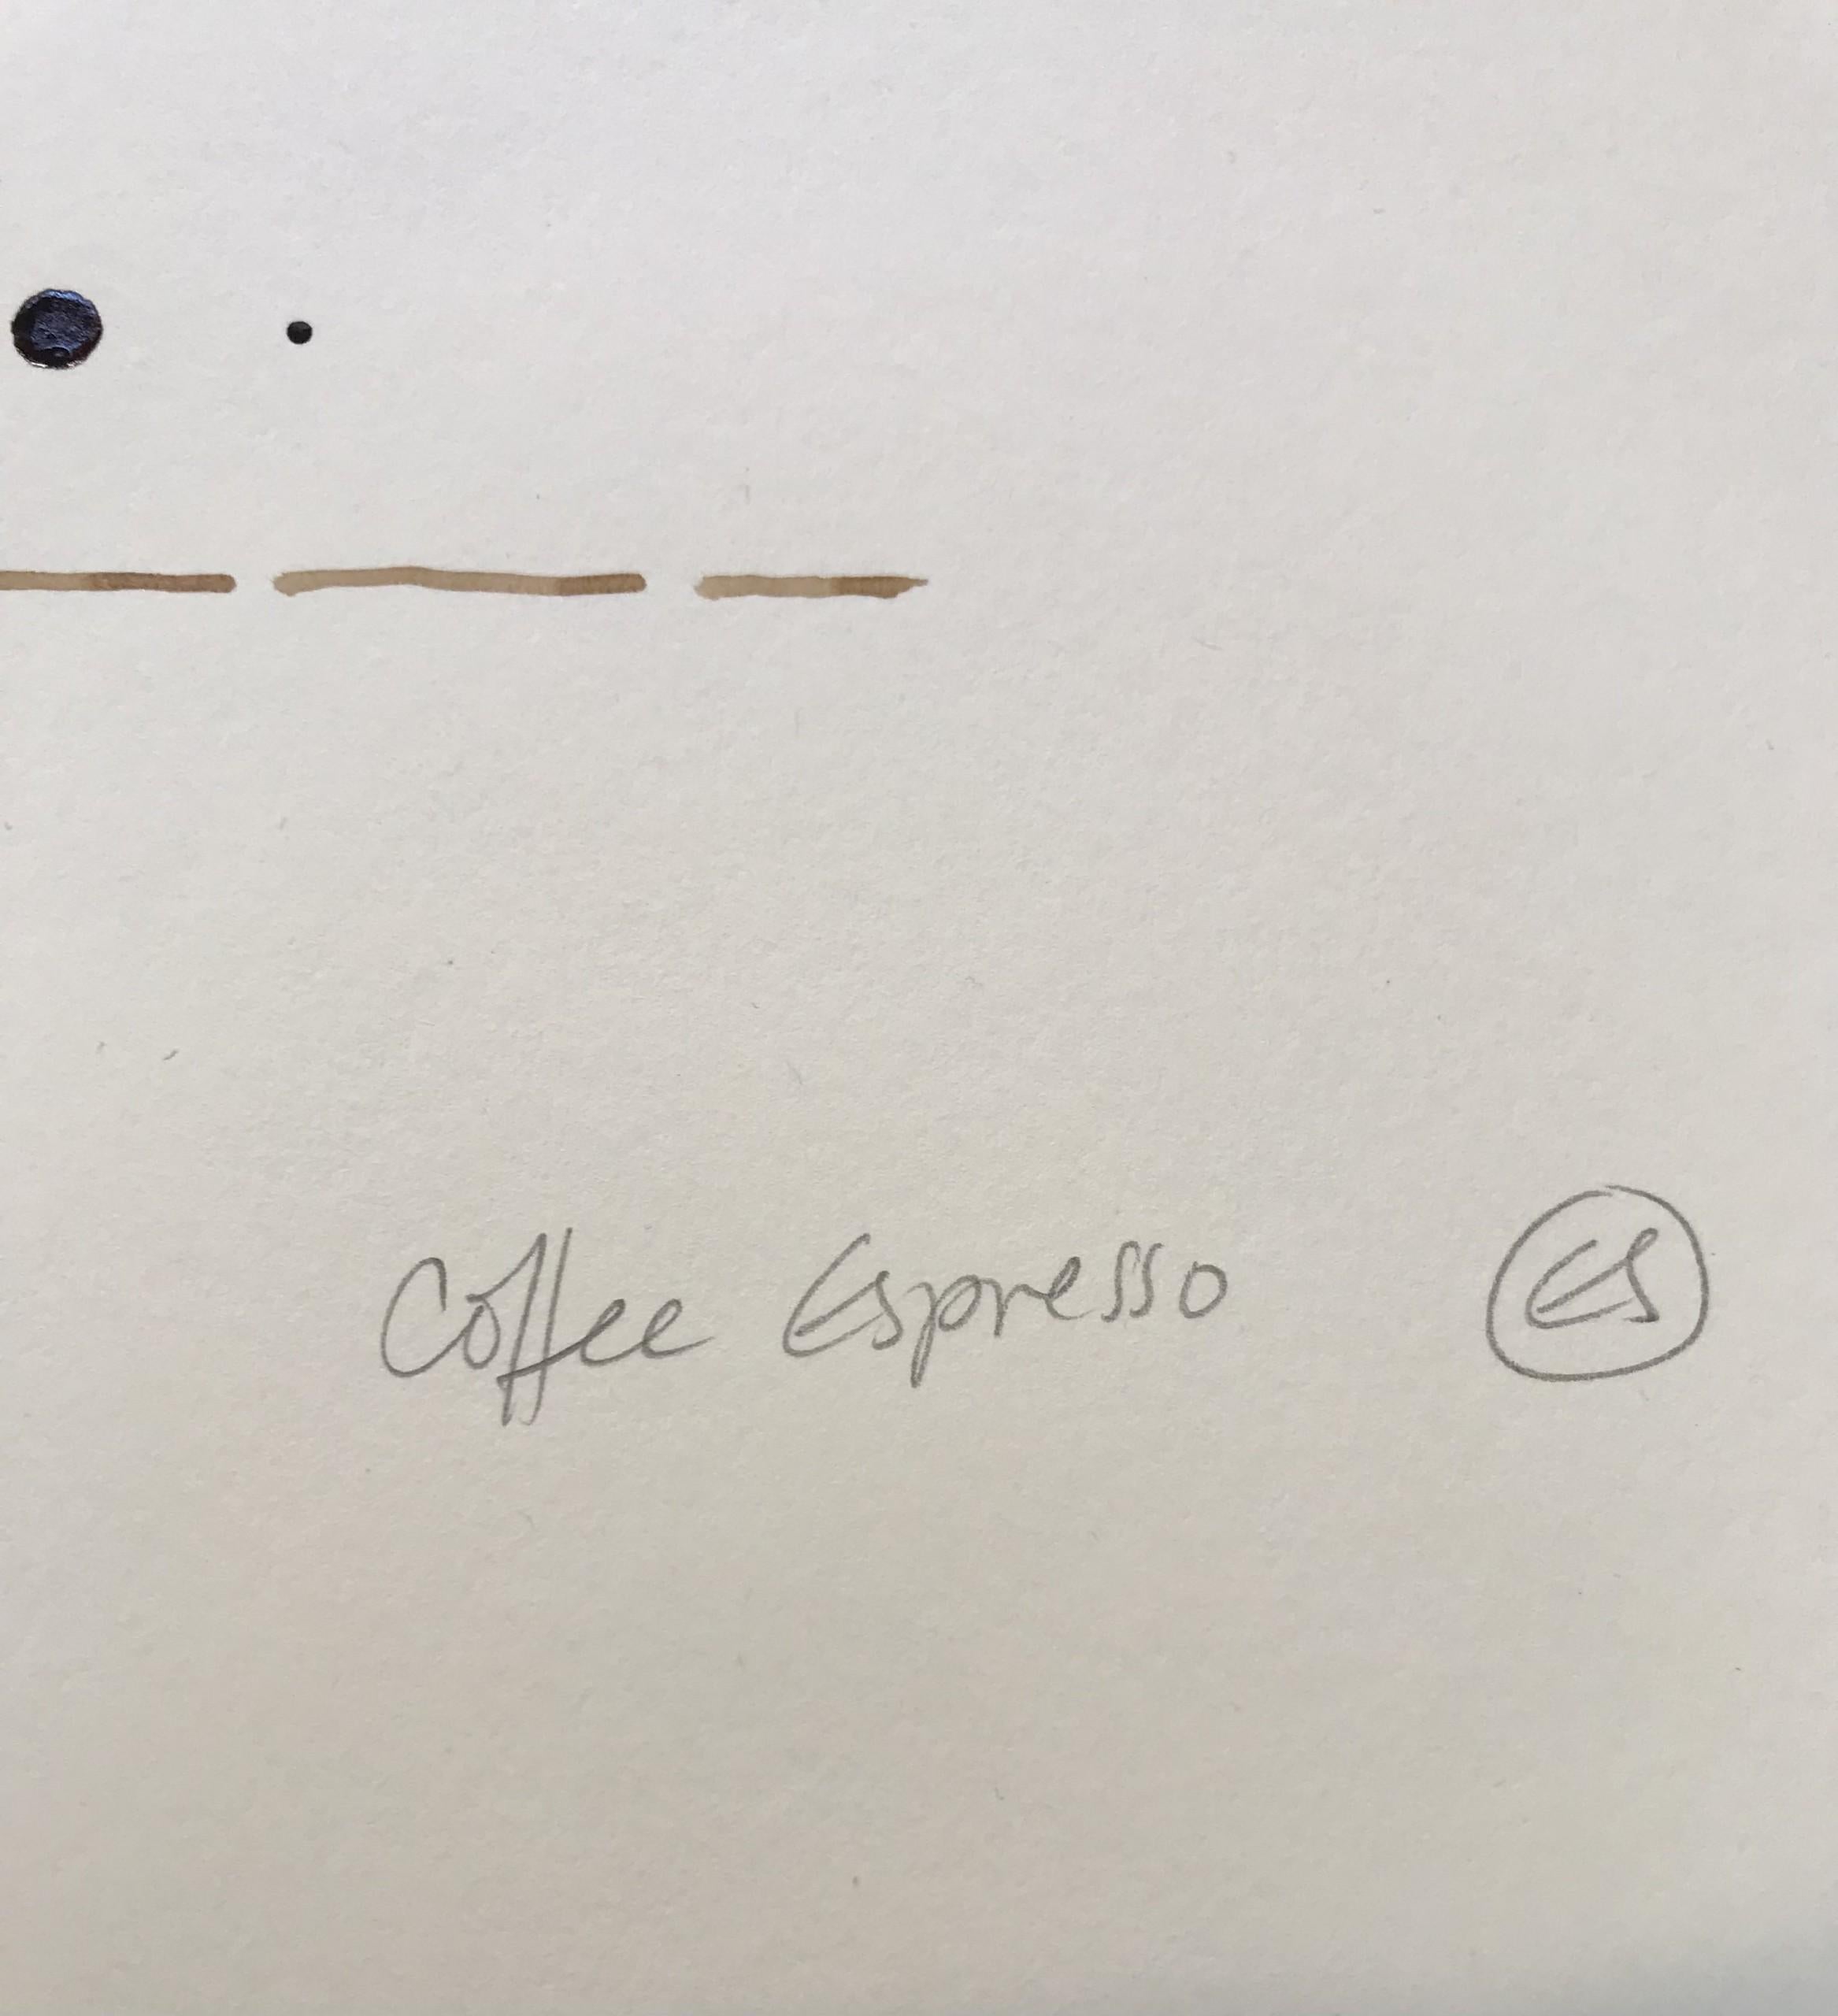 Coffee Espresso #20 by Eliza Southwood [2023]
k Coffee Espresso #20 by Eliza Southwood [2023] original Coffee on Paper Image size: H:42.5 cm x W:60 cm Complete Size of Unframed Work: H:42.5 cm x W:60 cm x D:0.1cm Sold Unframed Please note that